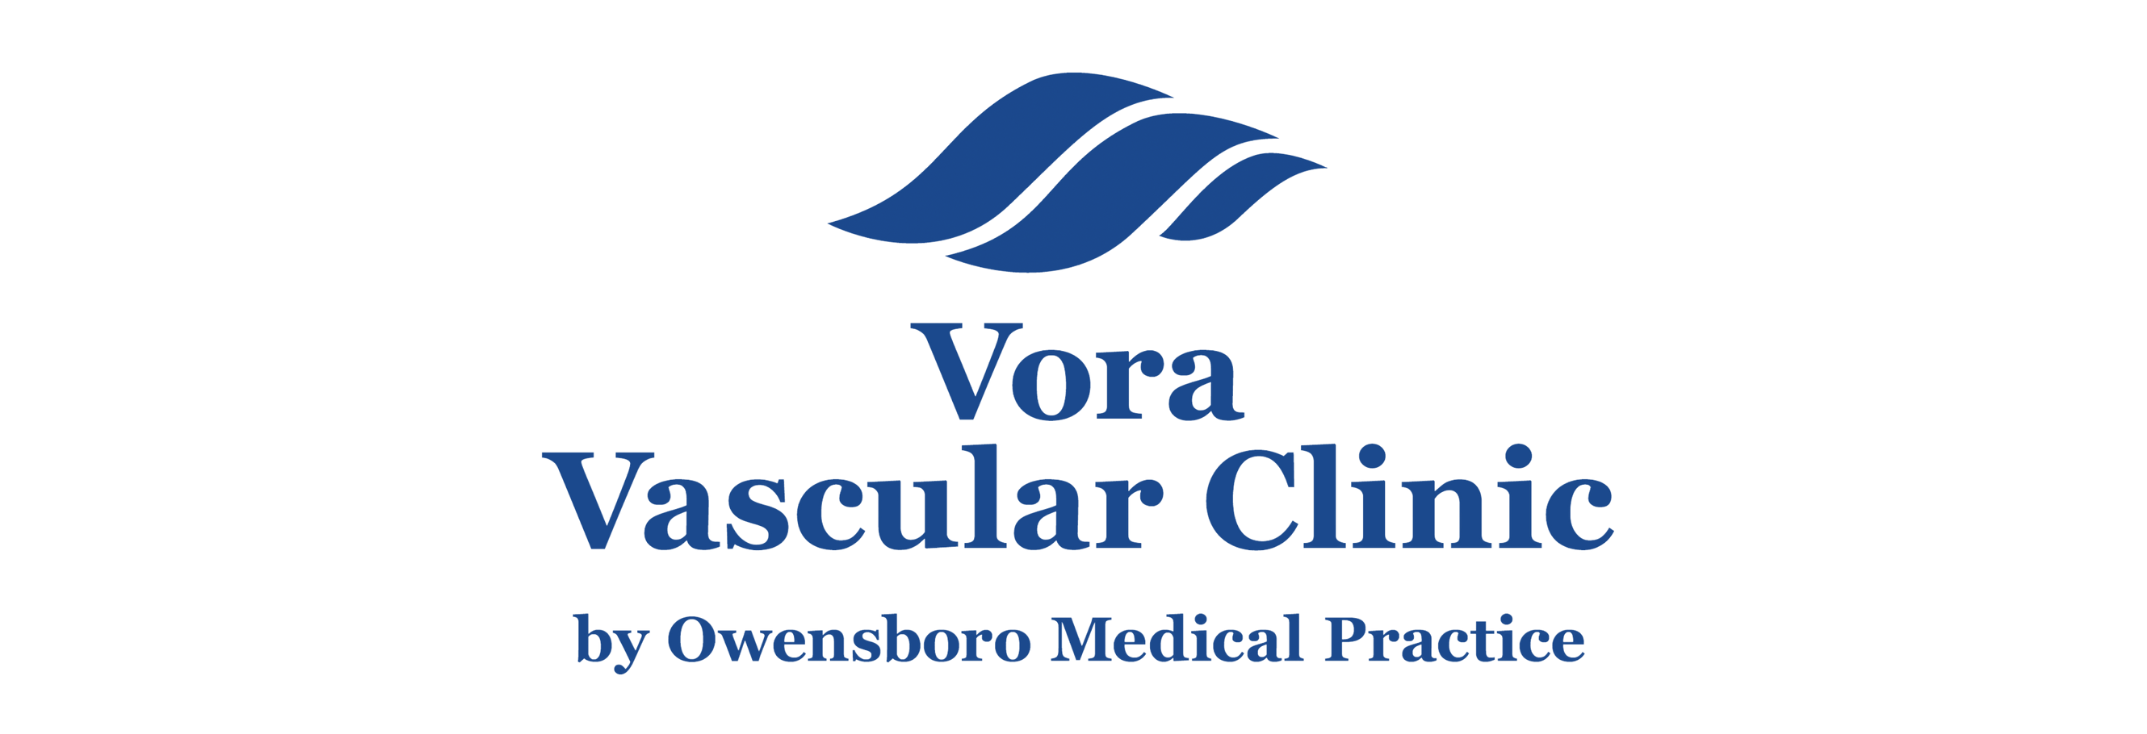 Vora Vascular Clinic